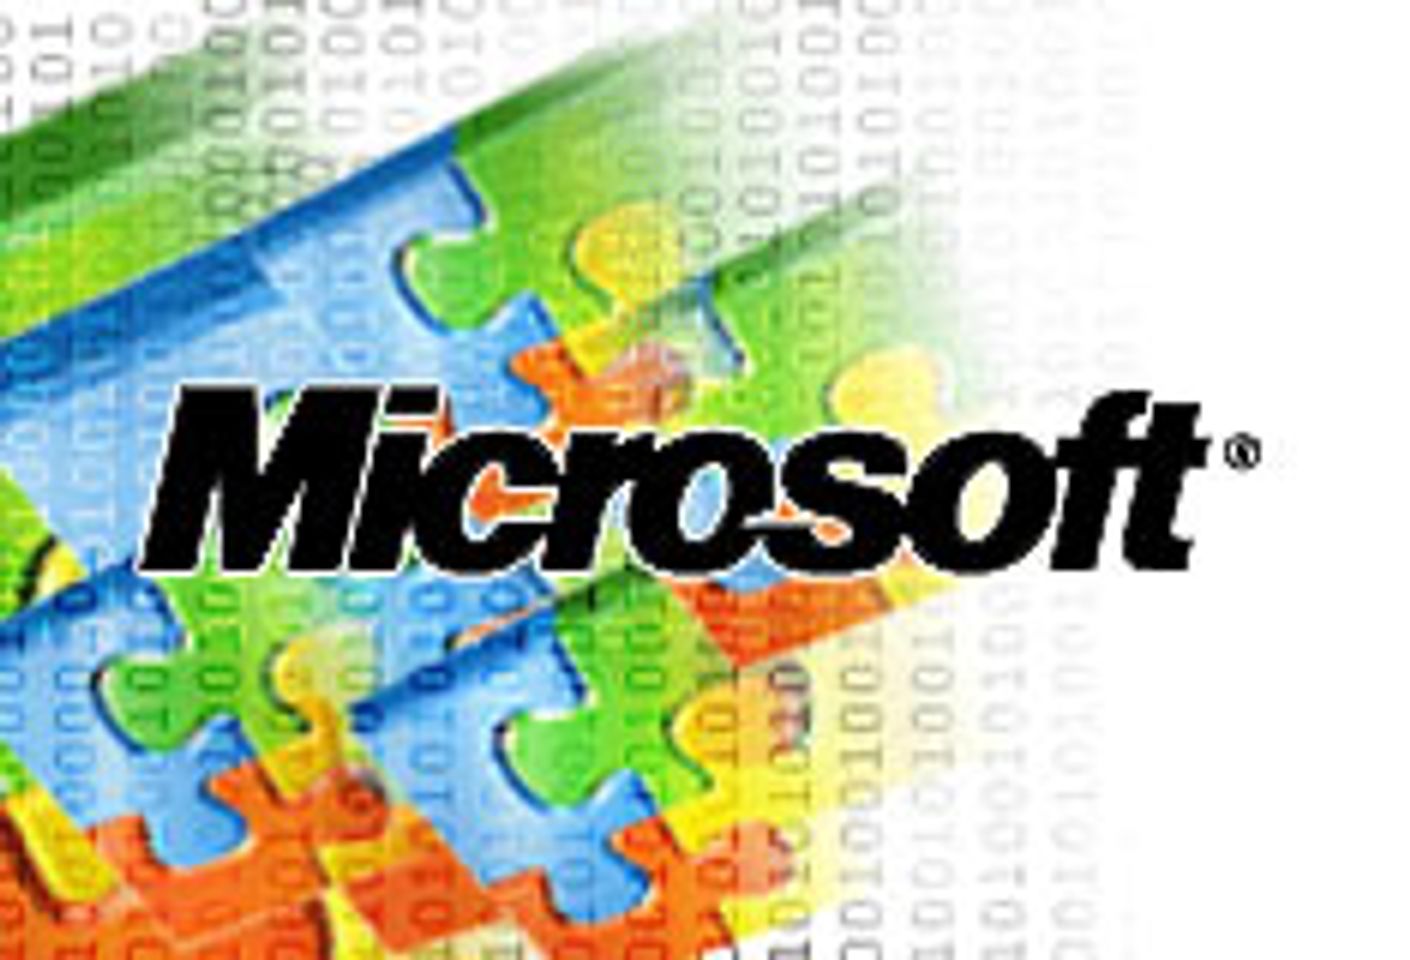 New Technology Licensing Program: Microsoft